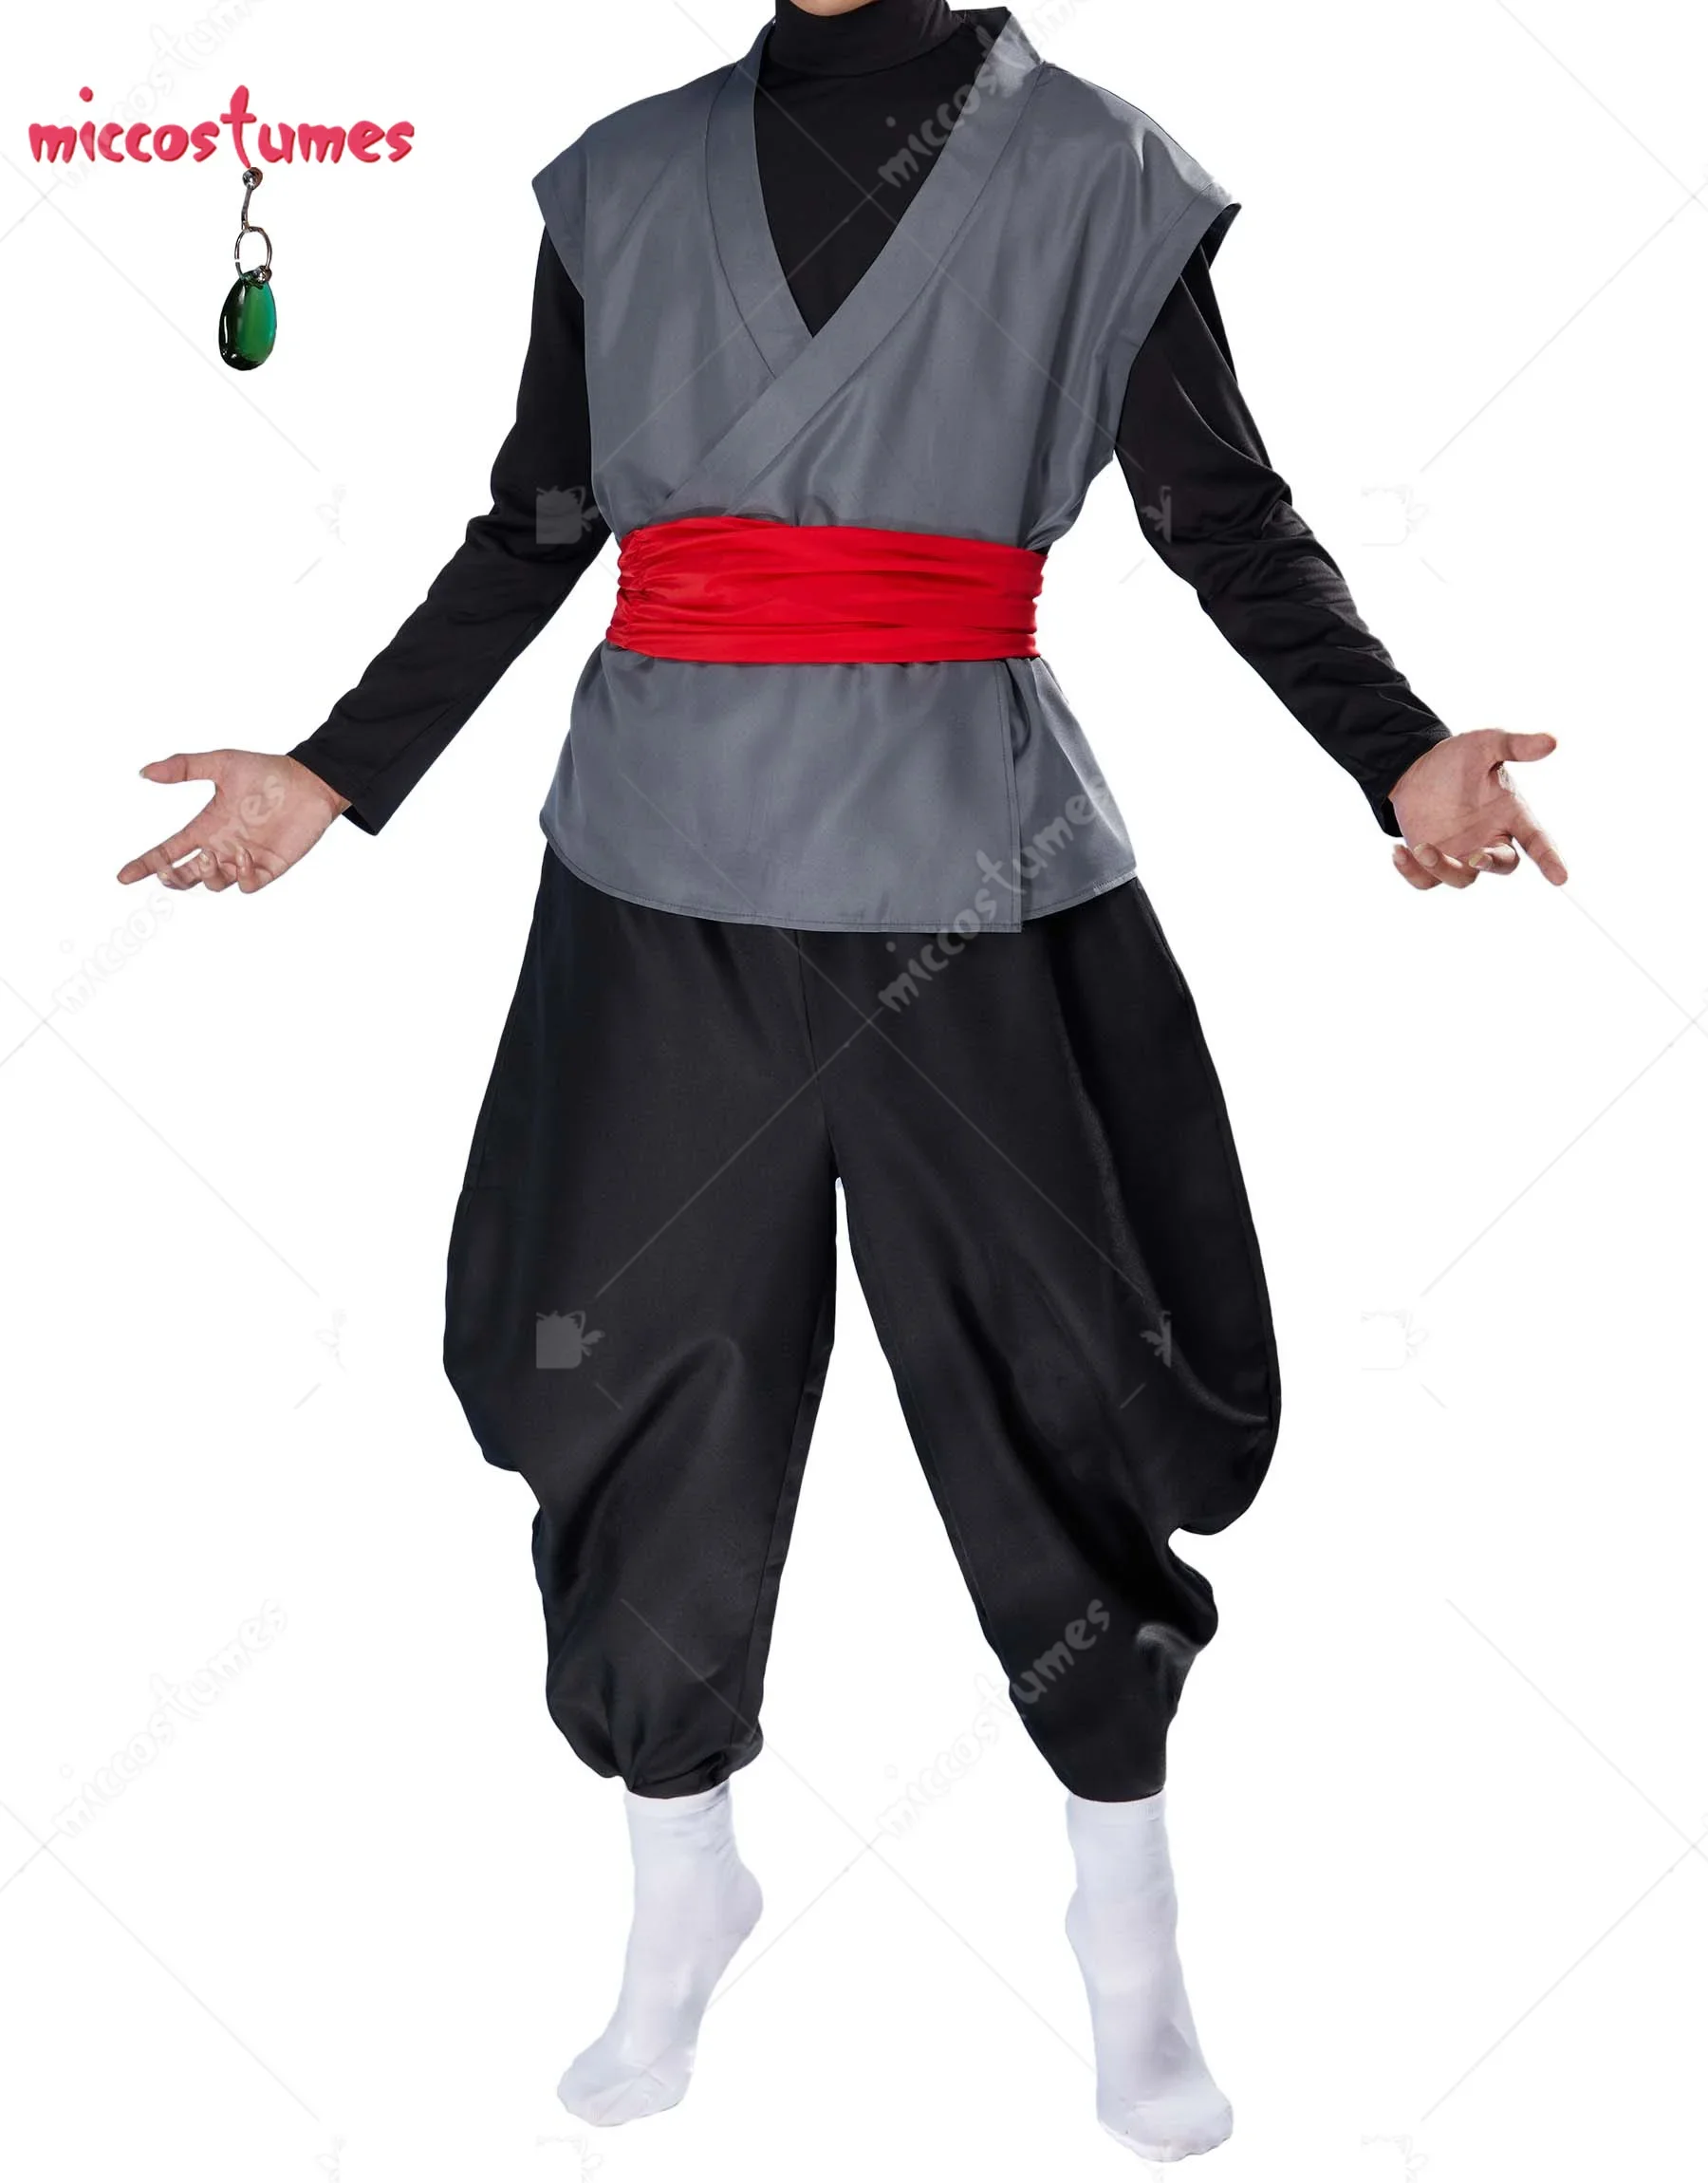 

Miccostumes Men's Kung Fu Suit With Earrings Anime Black Cosplay Costume Halloween